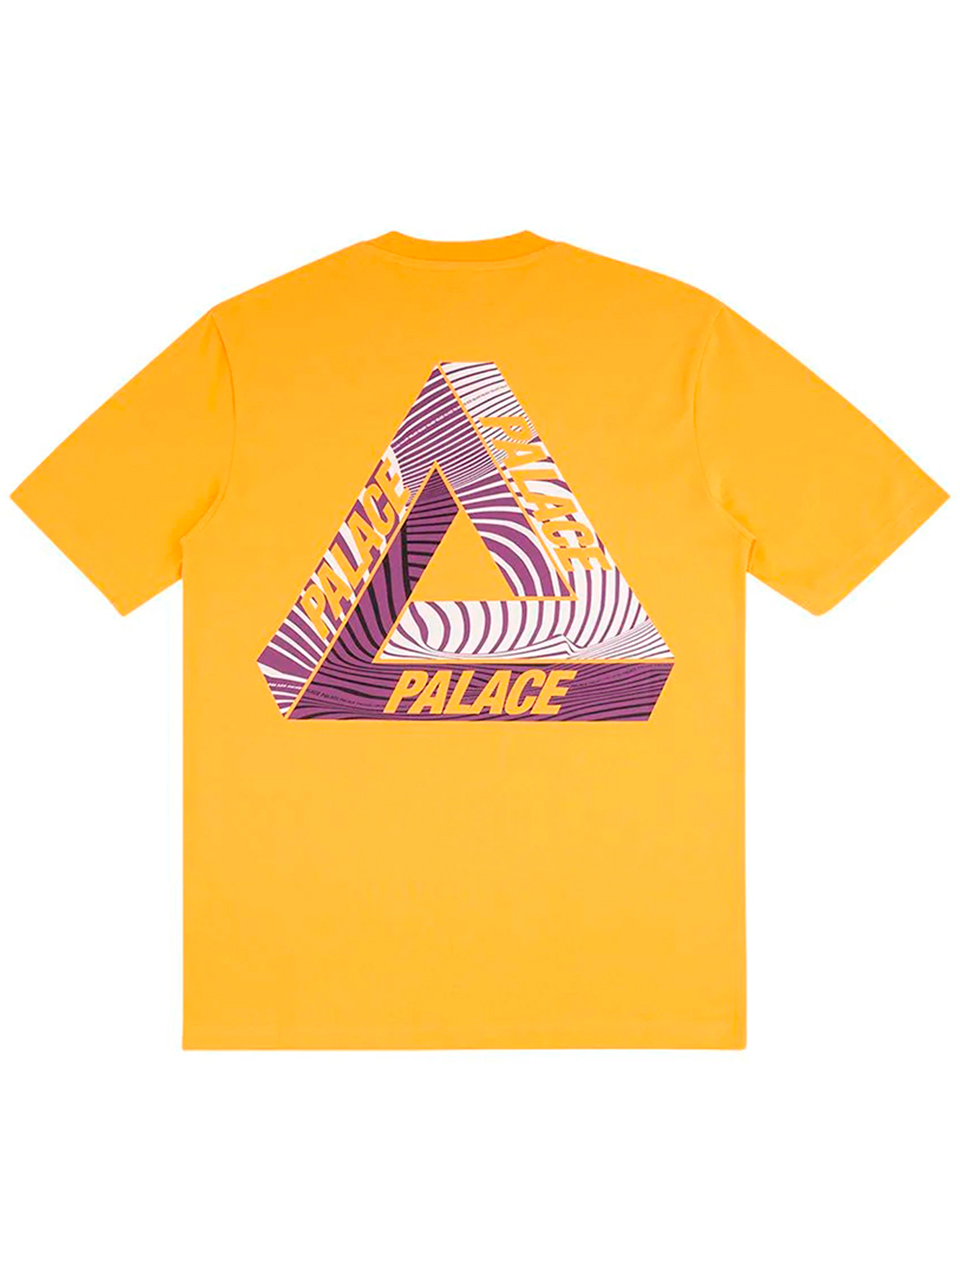 Imagem de: Camiseta Palace Amarela Tri-Tex